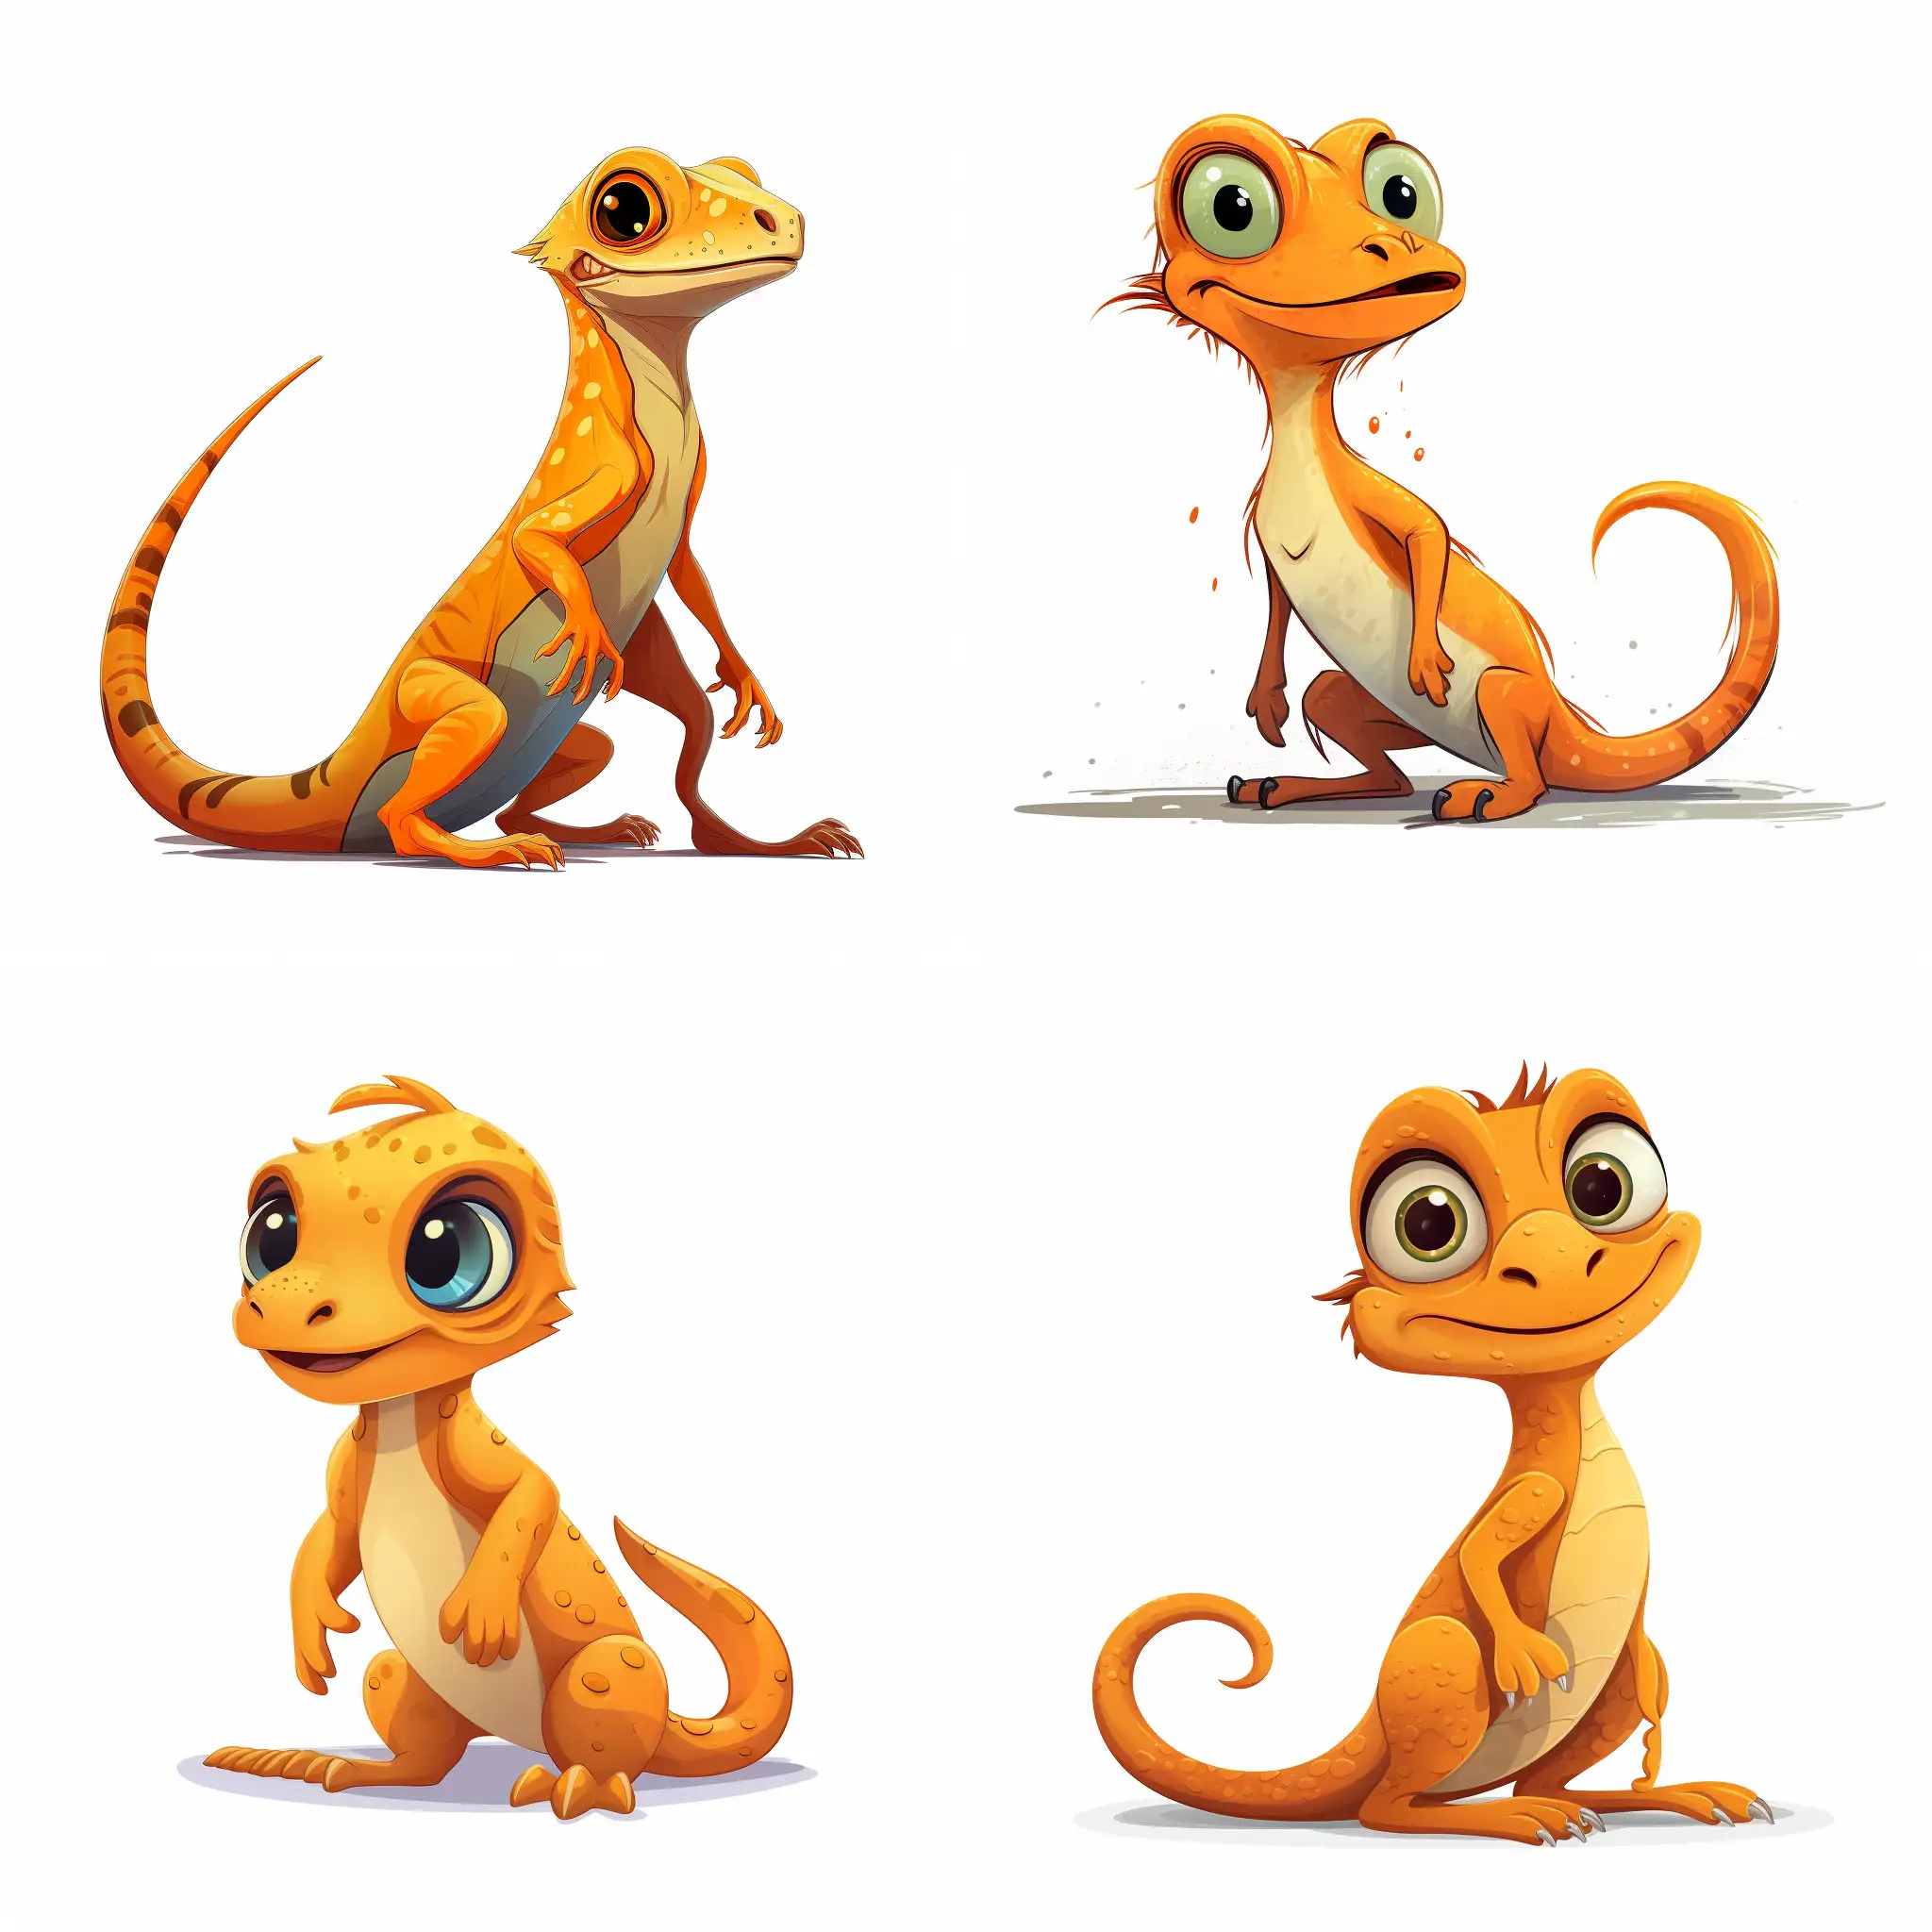 Playful-Cartoon-Orange-Lizard-Illustration-on-Clean-White-Background